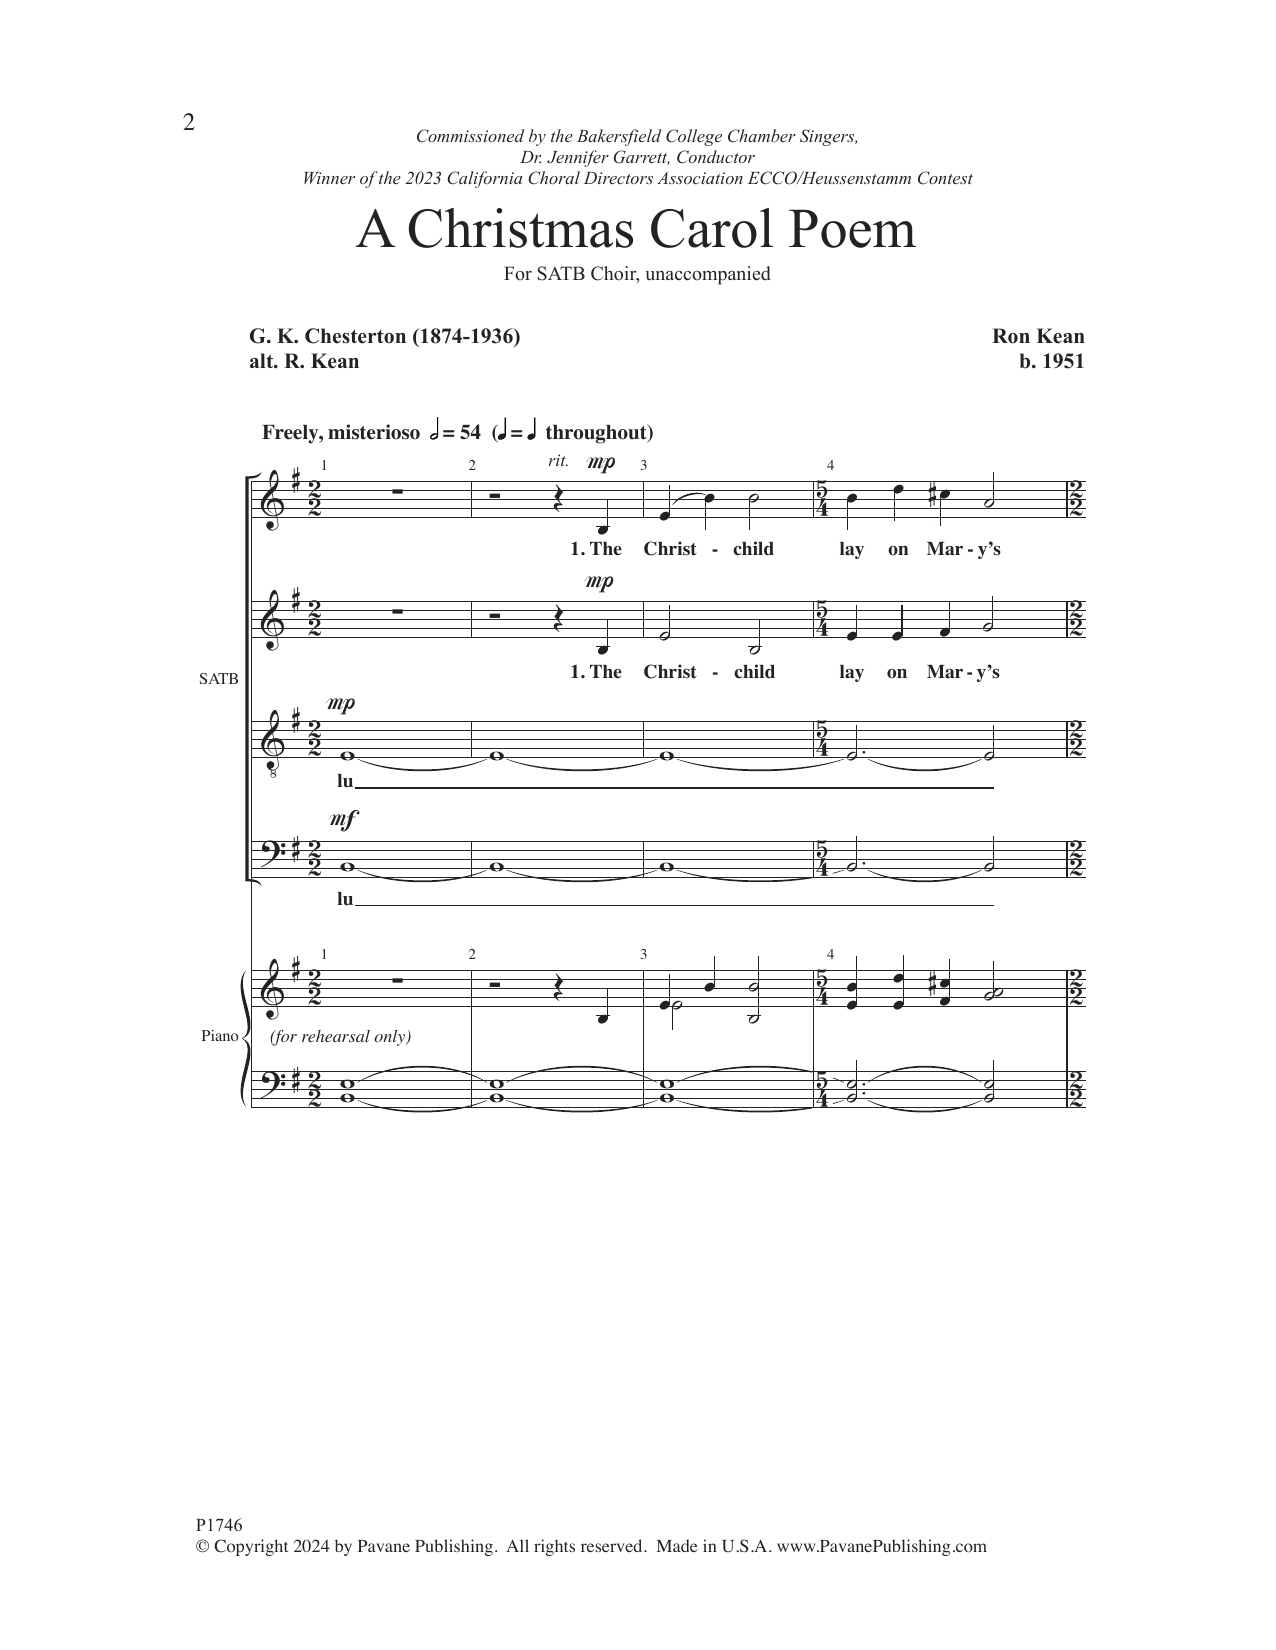 Ron Kean A Christmas Carol Poem sheet music notes and chords arranged for SATB Choir